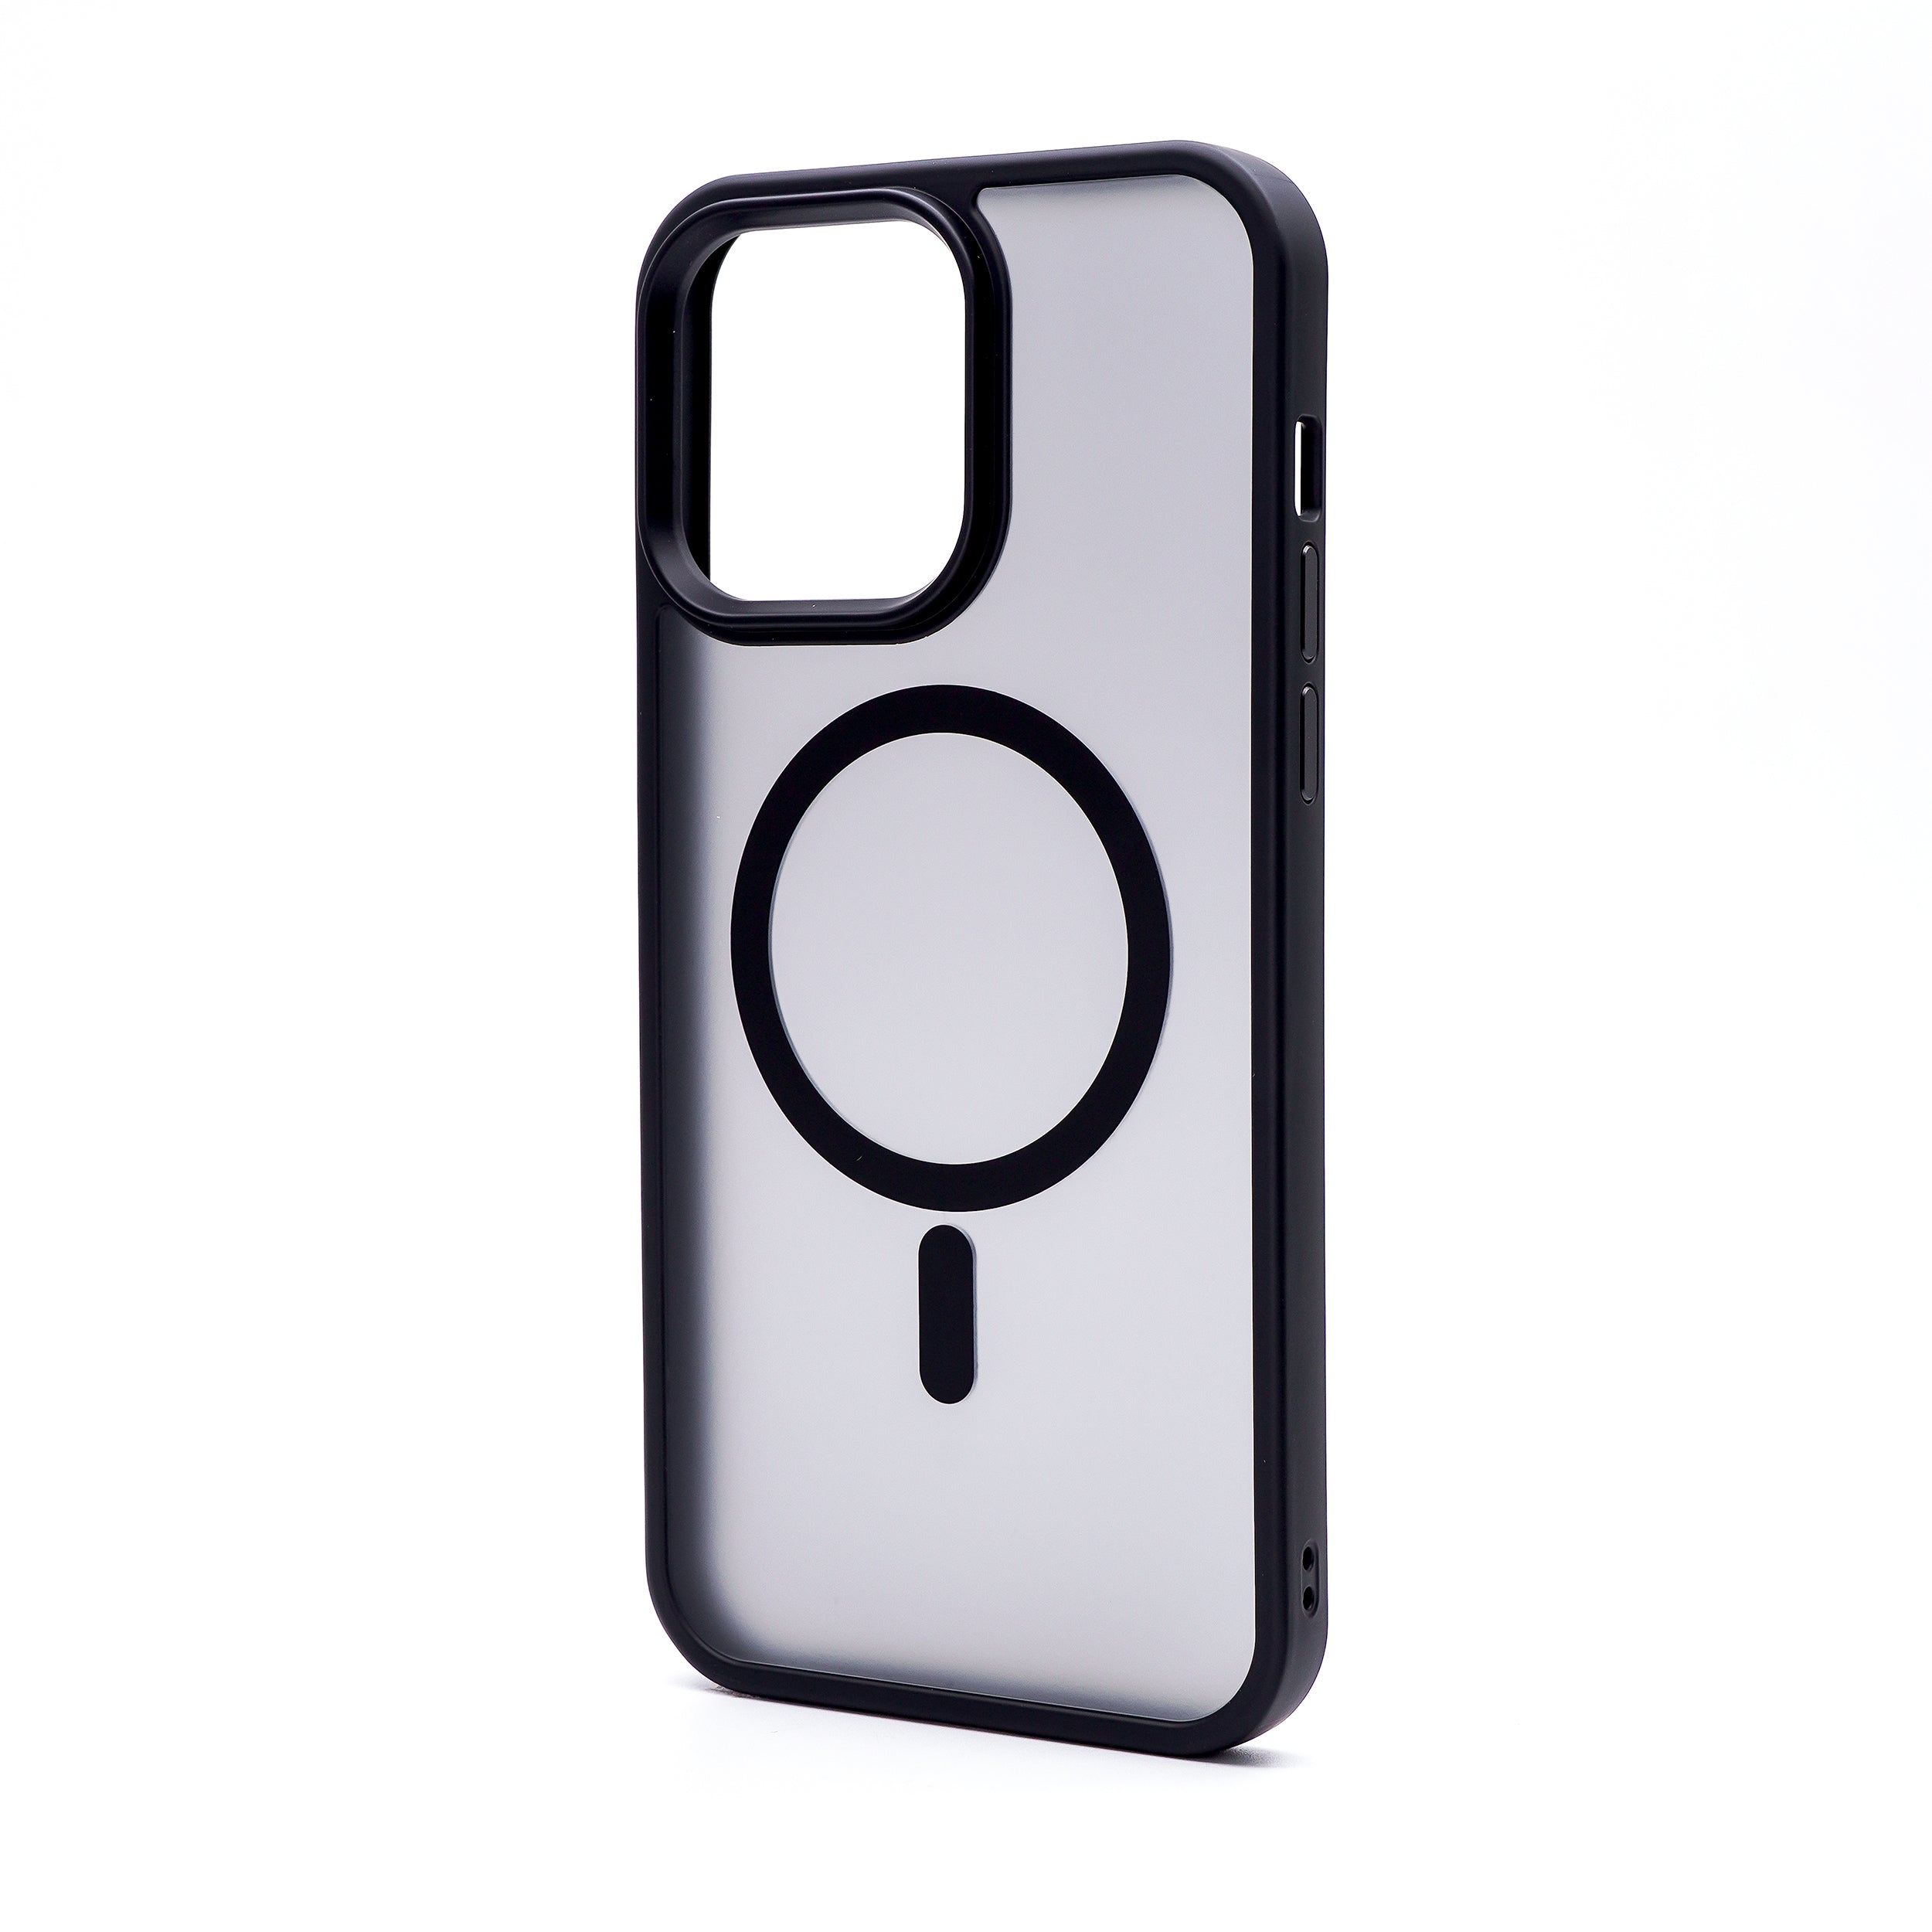 iPhone 14 Pro SPECTRUM Halo Slim MagSafe Case - Smoke